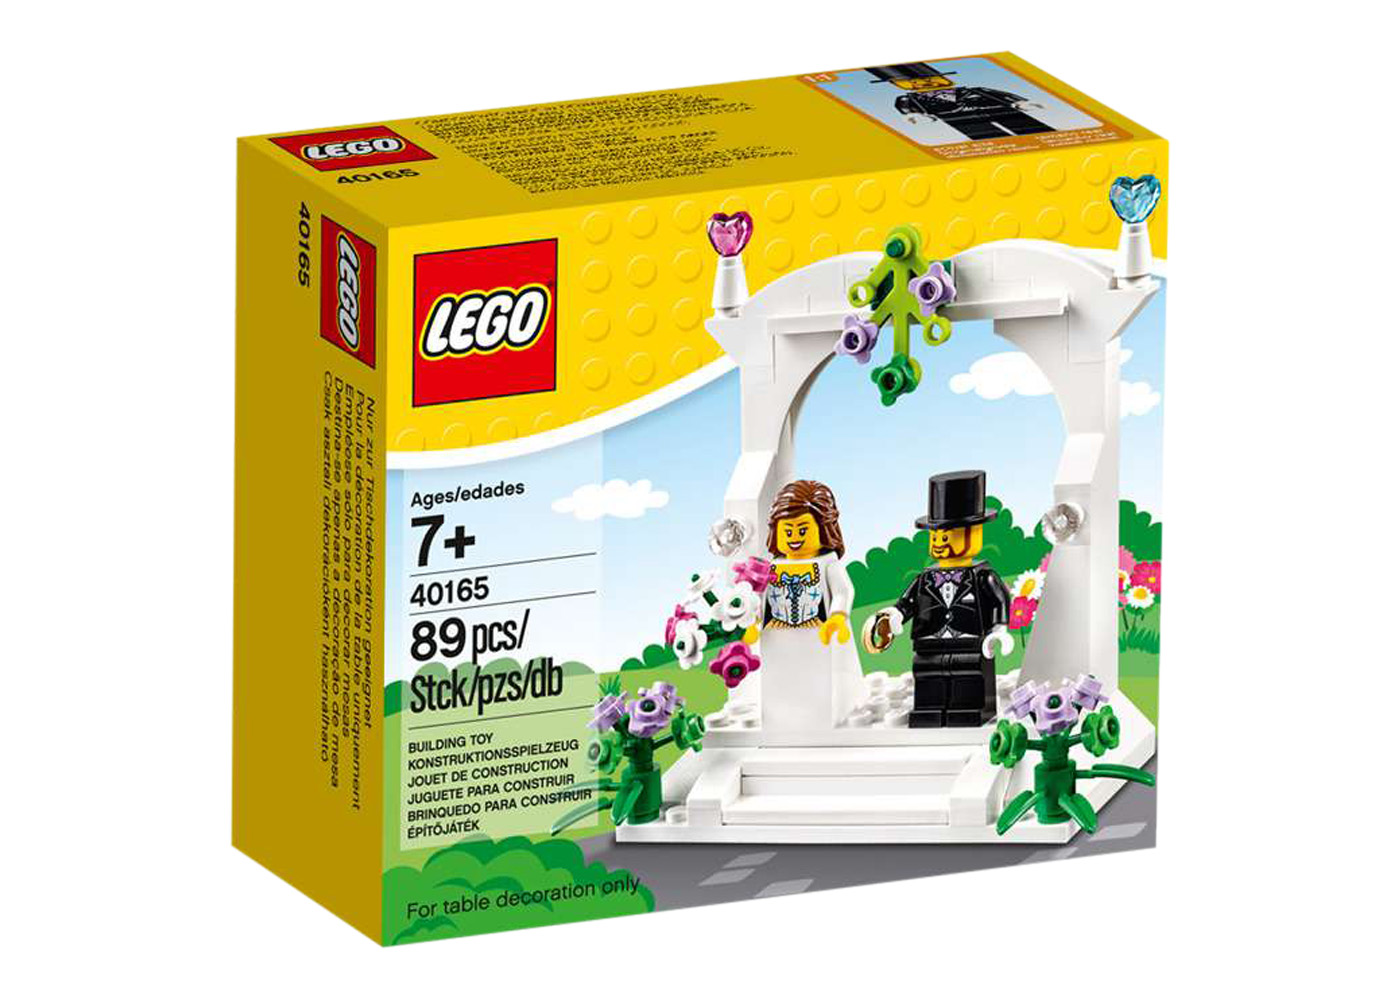 LEGO Wedding Favor Set 40165